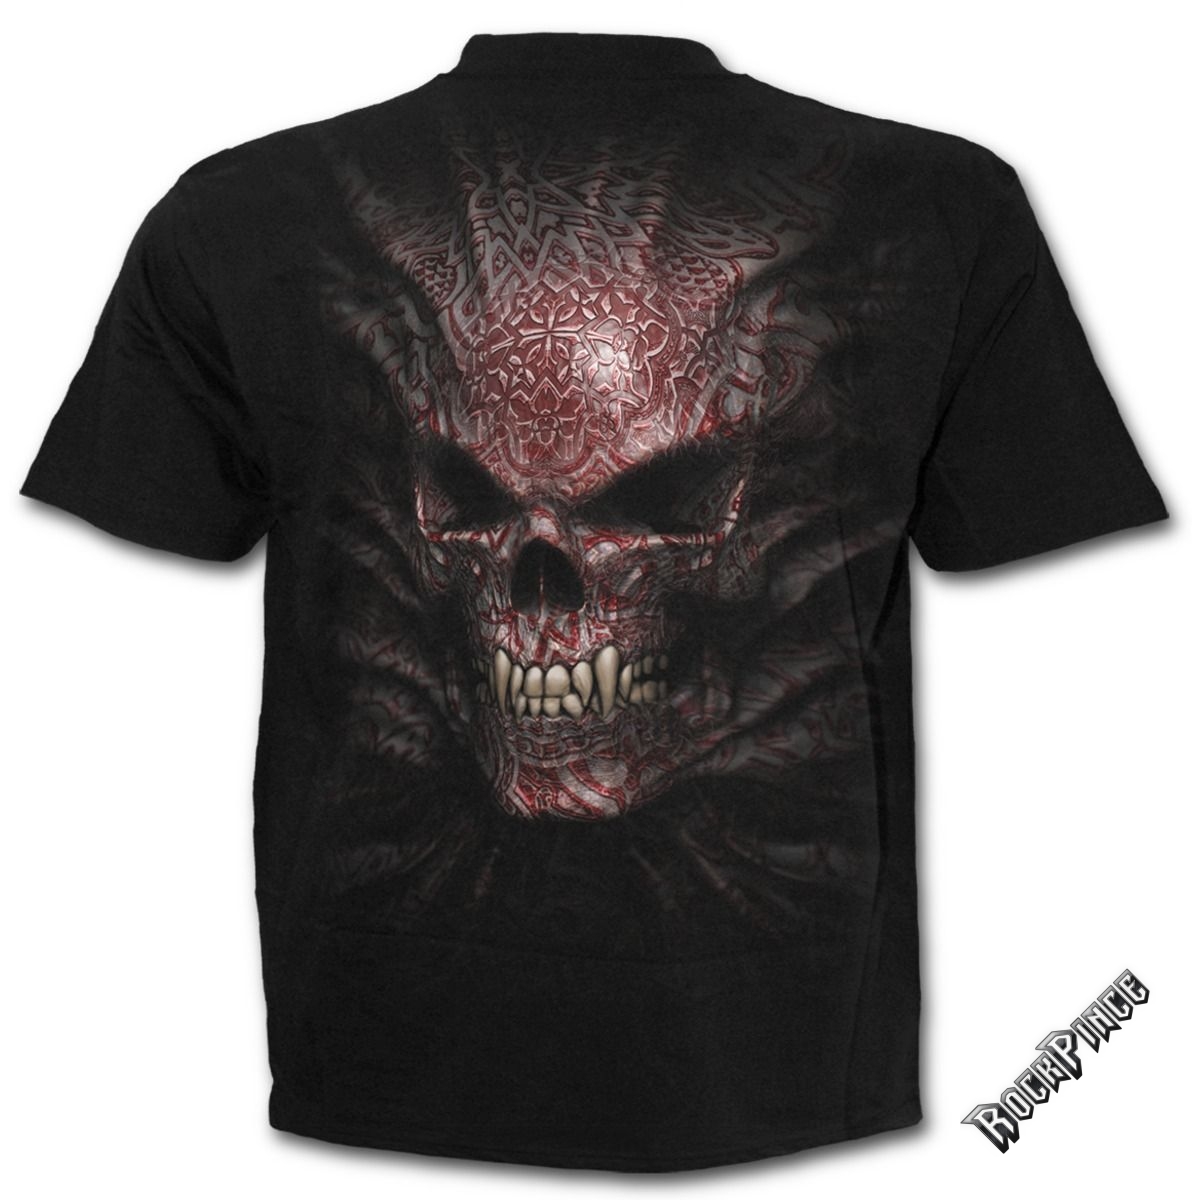 GOTH SKULL - T-Shirt Black - T069M101